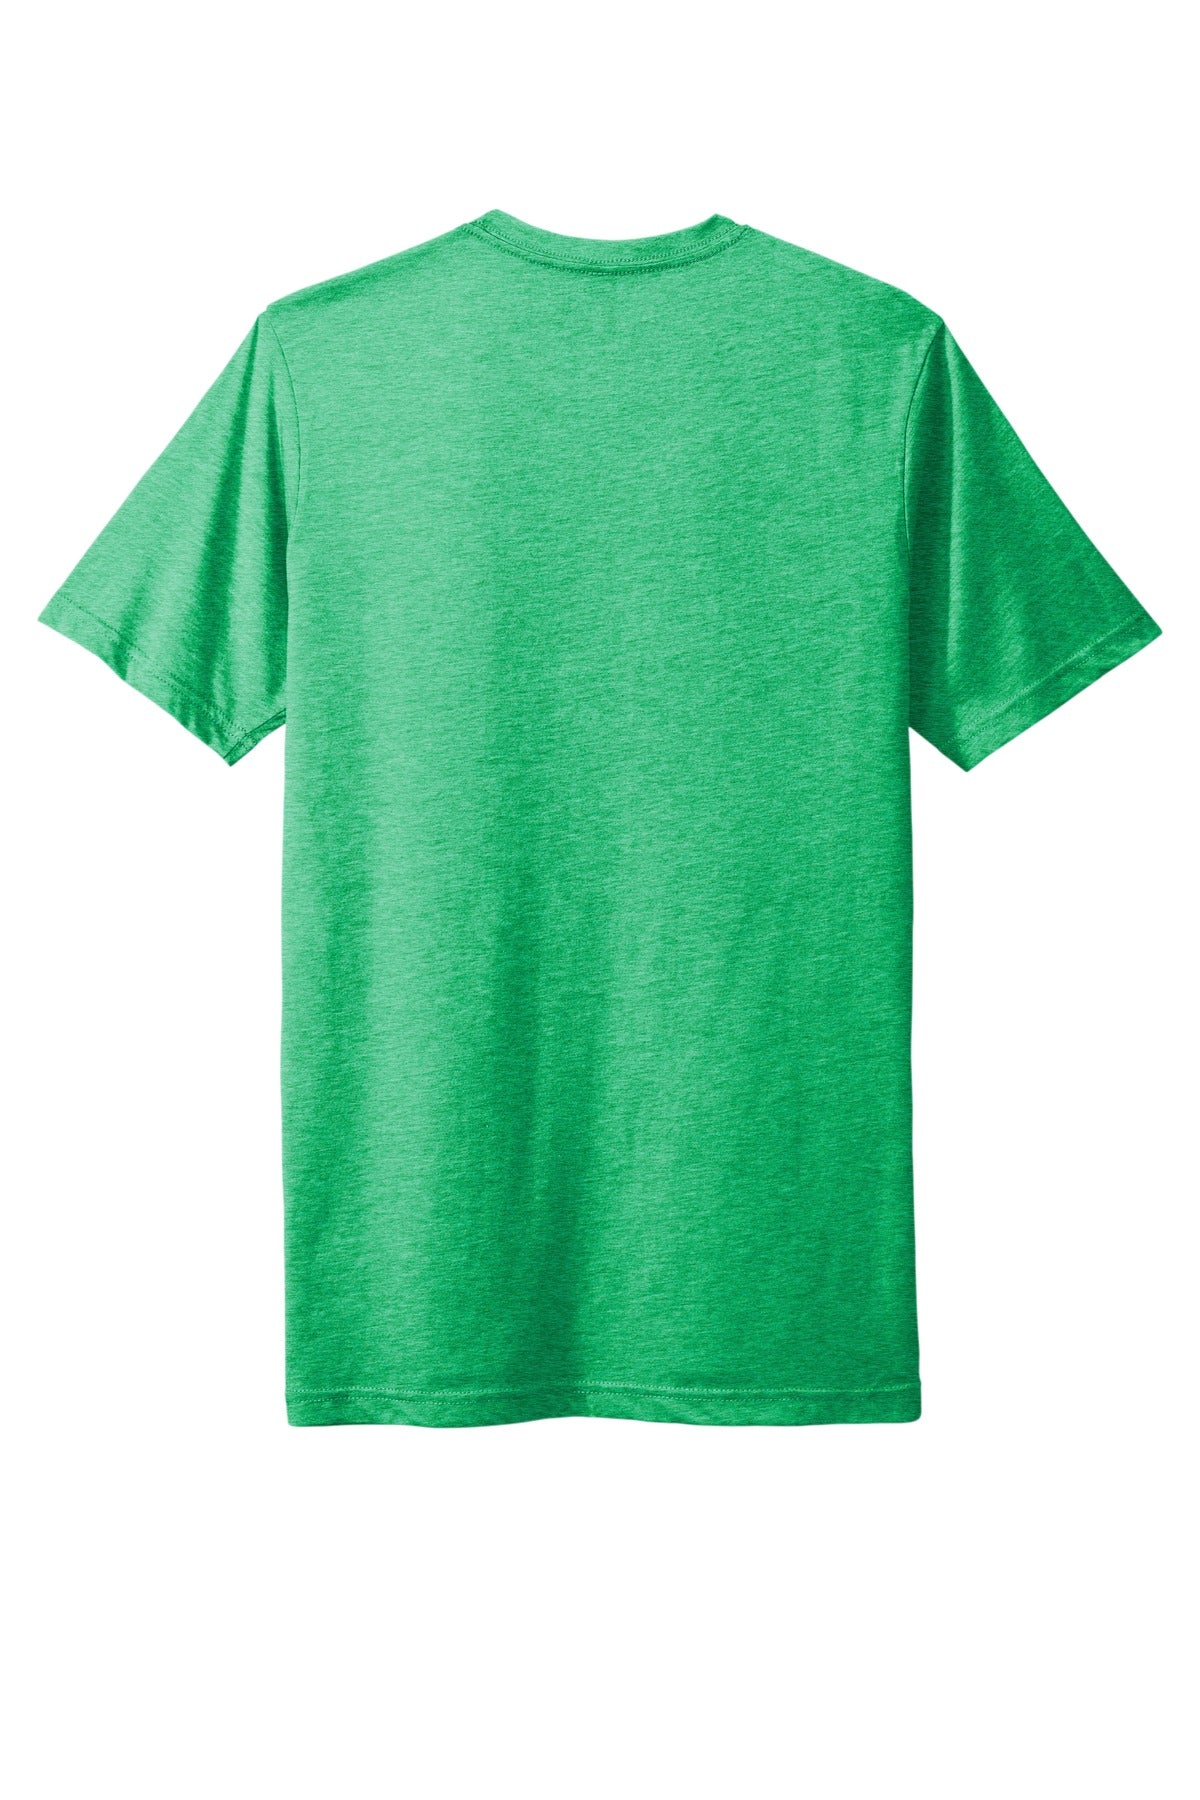 Next Level Apparel Unisex Poly/Cotton Tee. NL6200 - BT Imprintables Shirts